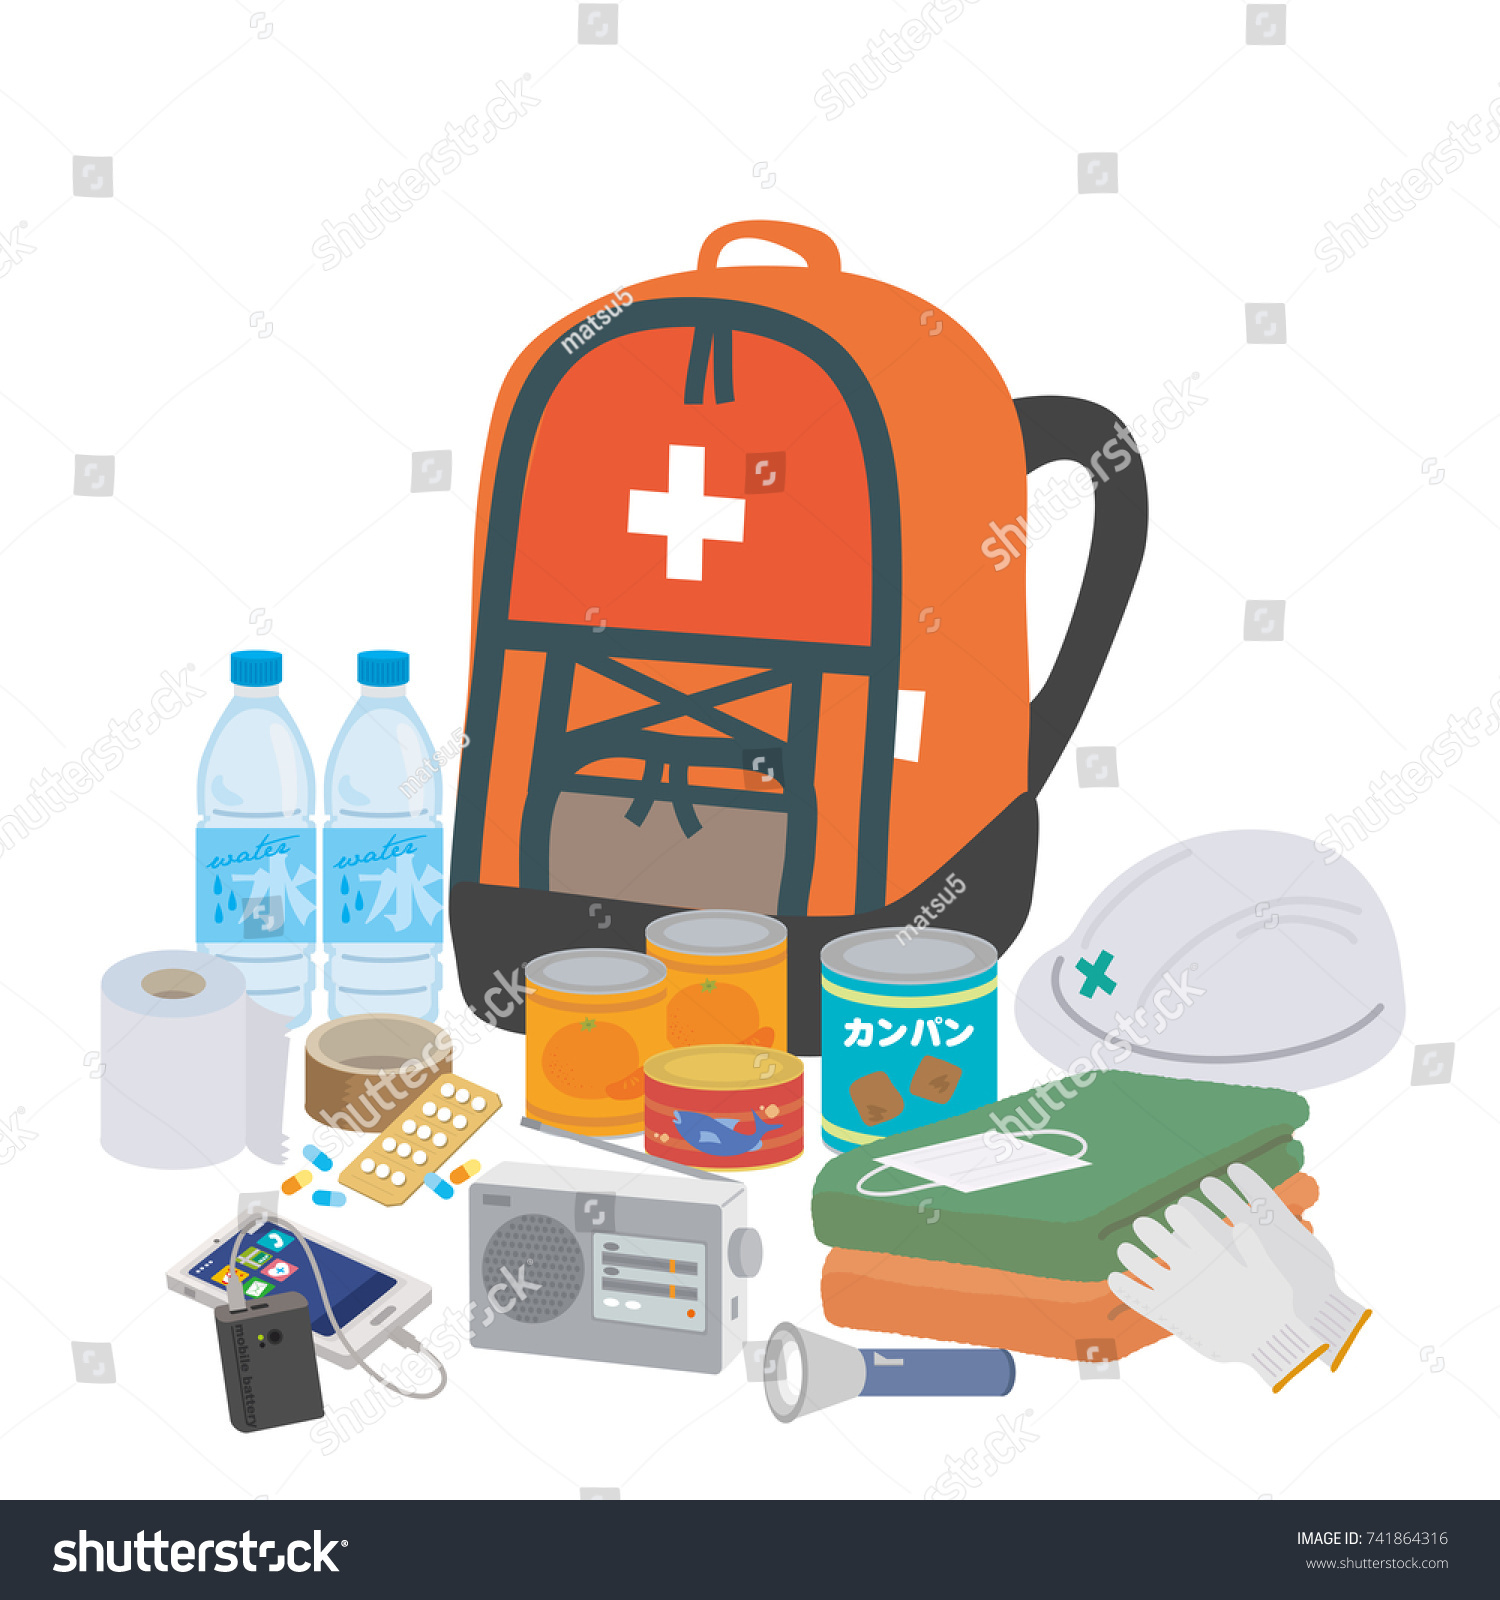 967 Disaster kit bag Images, Stock Photos & Vectors | Shutterstock